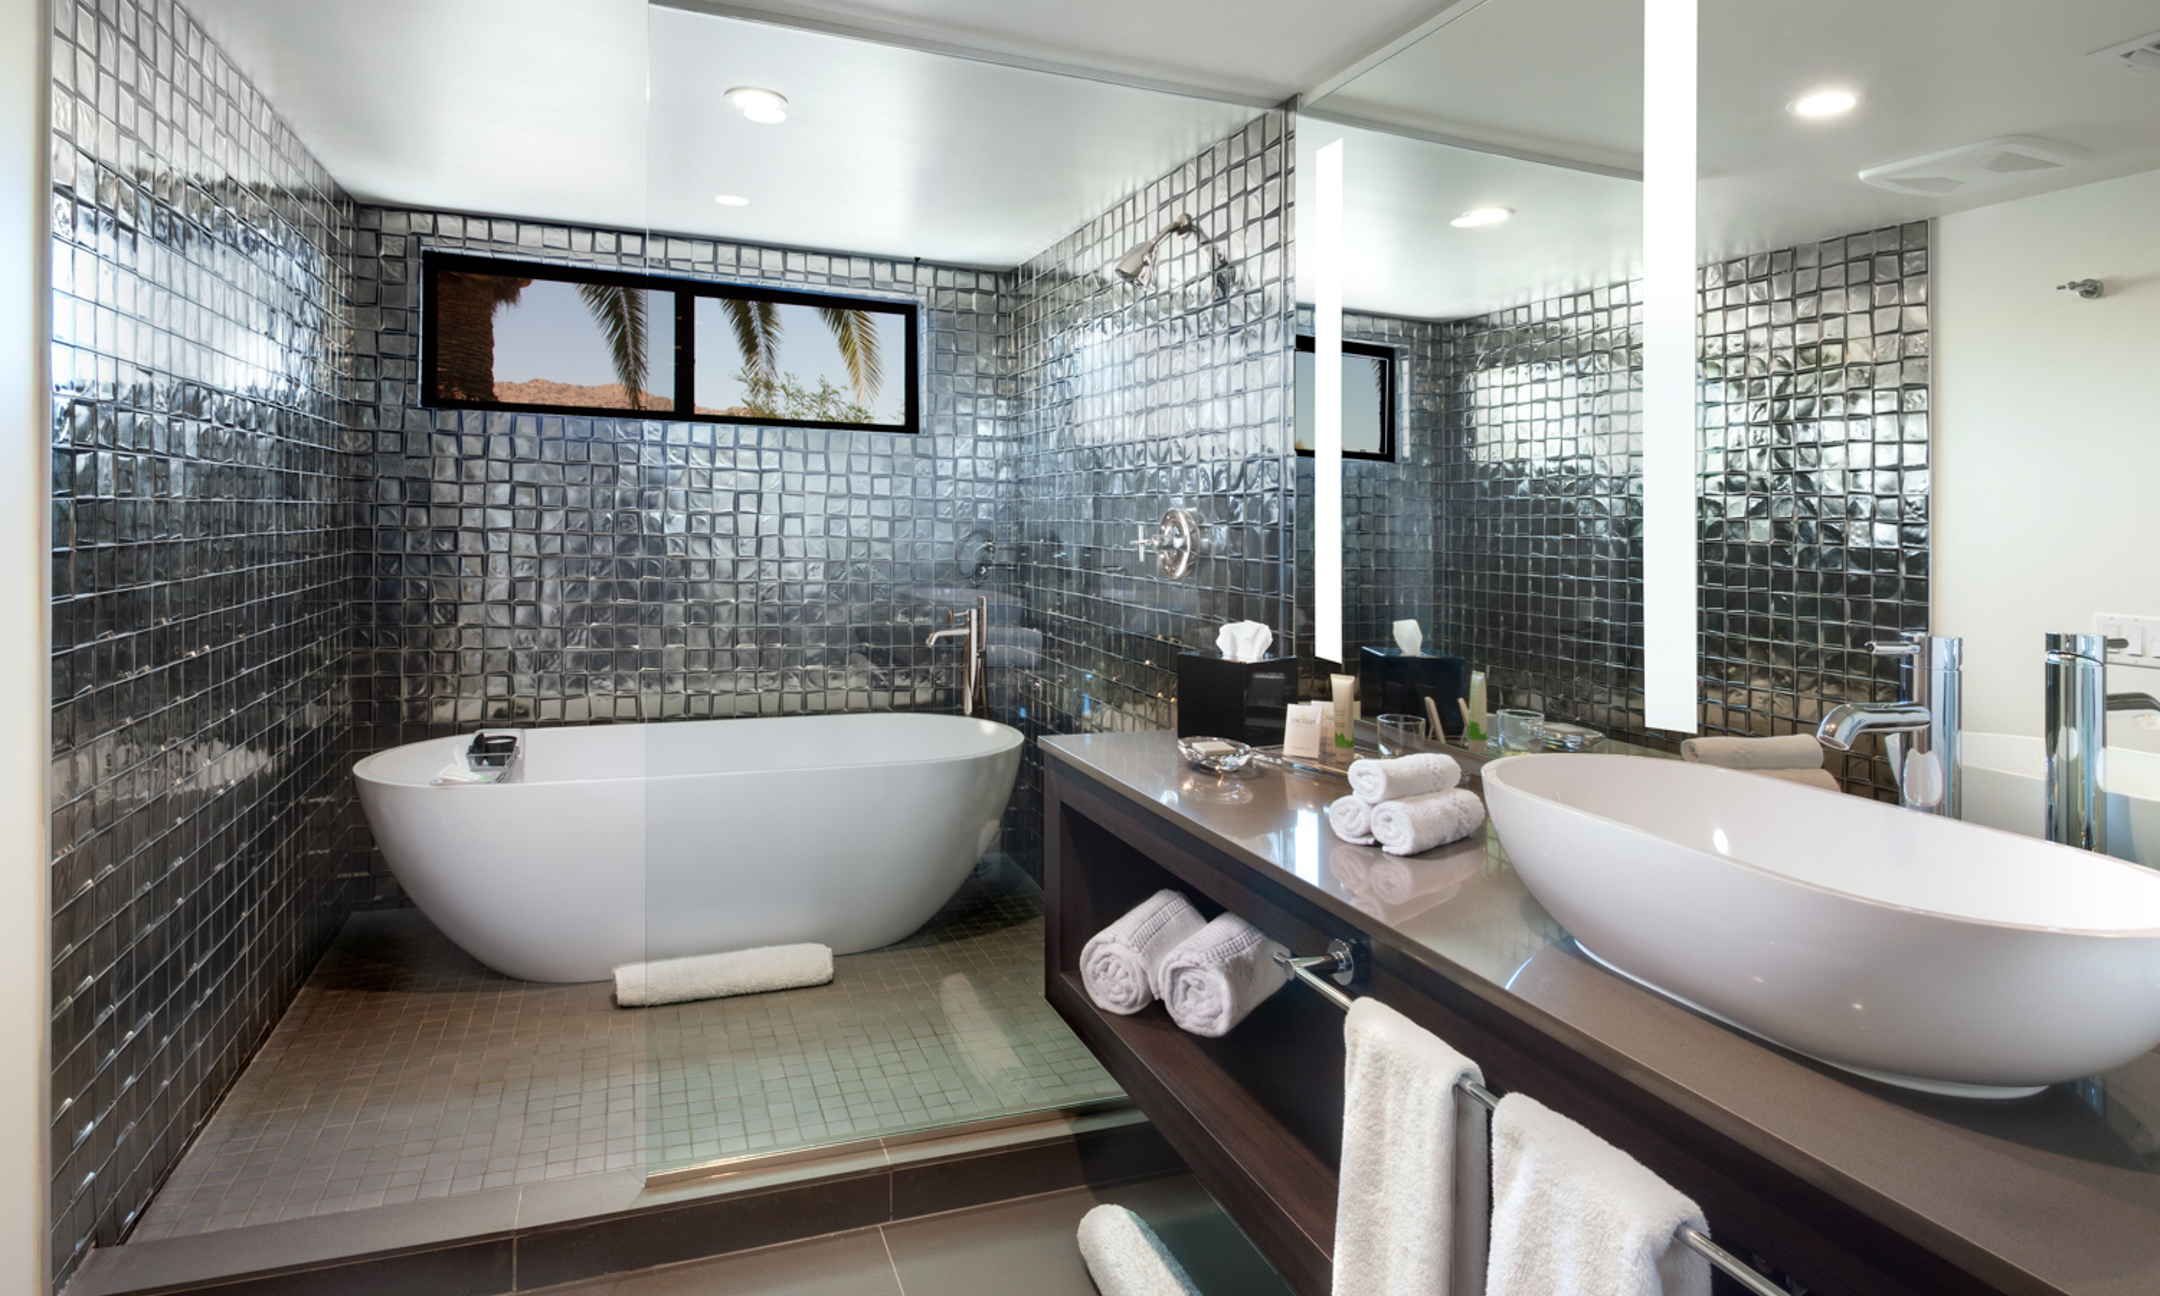 Metallic tiled bathroom with sink, soaking tub and walk-in shower.